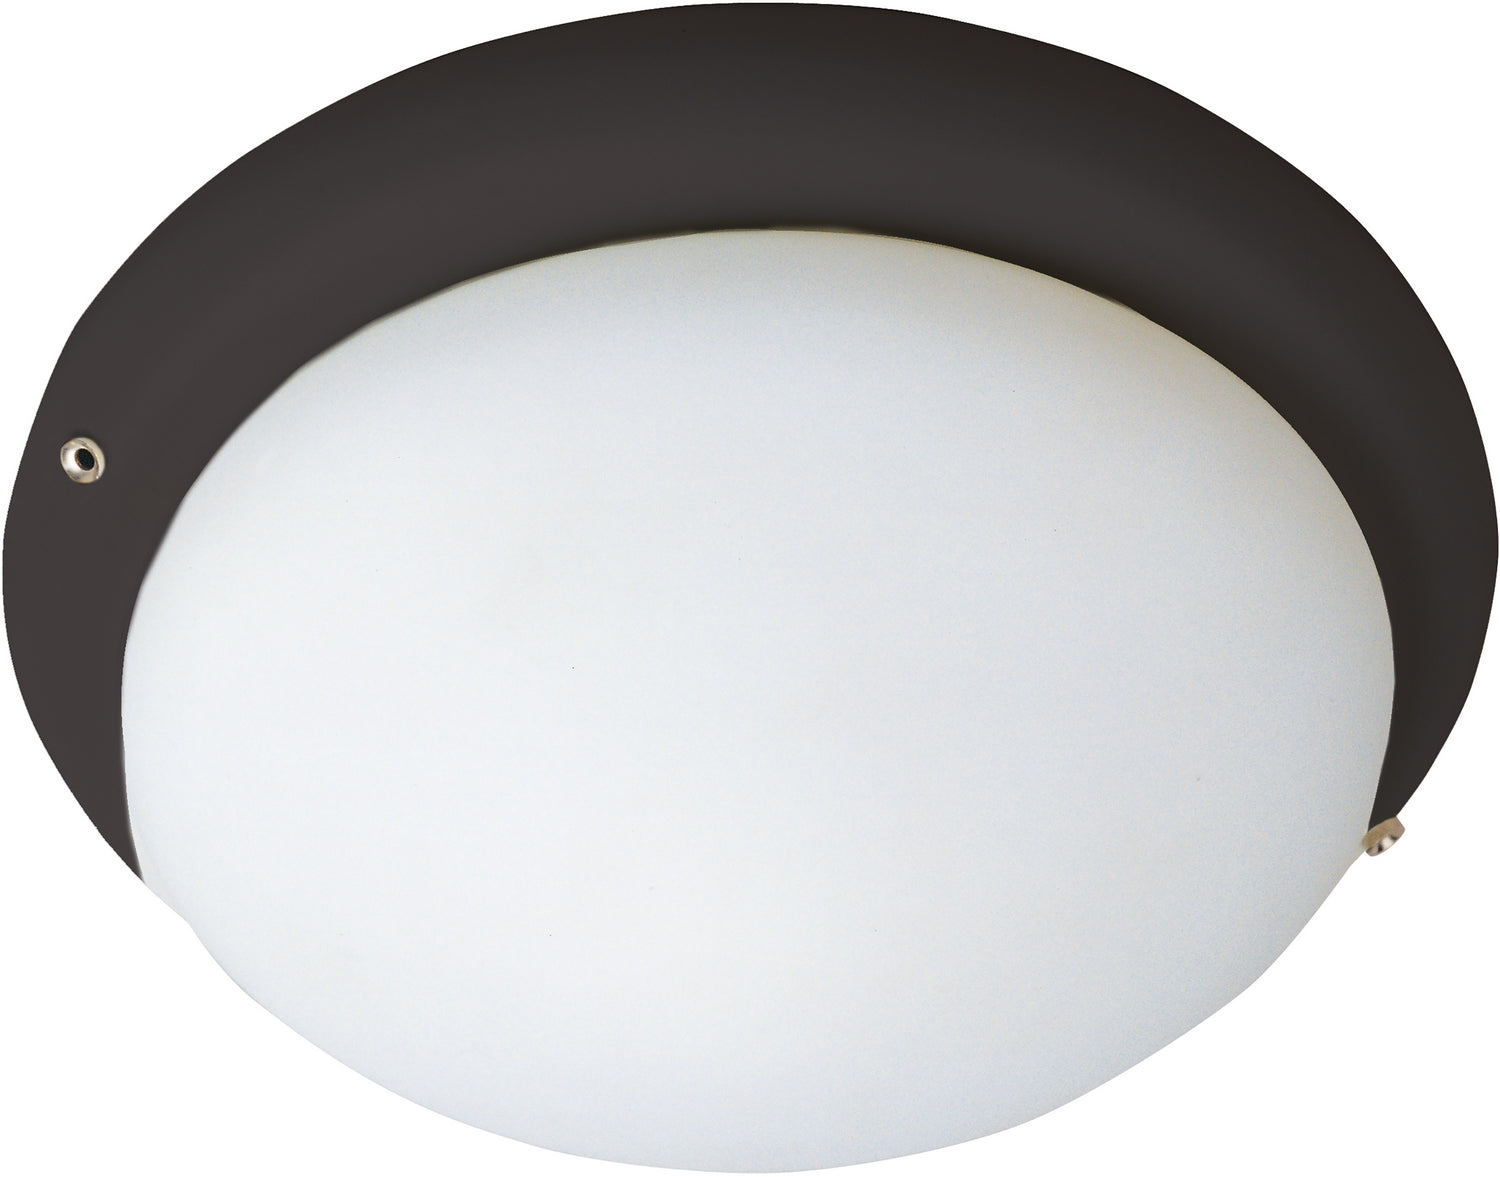 Maxim - One Light Ceiling Fan Light Kit - Fan Light Kits - Oil Rubbed Bronze- Union Lighting Luminaires Decor